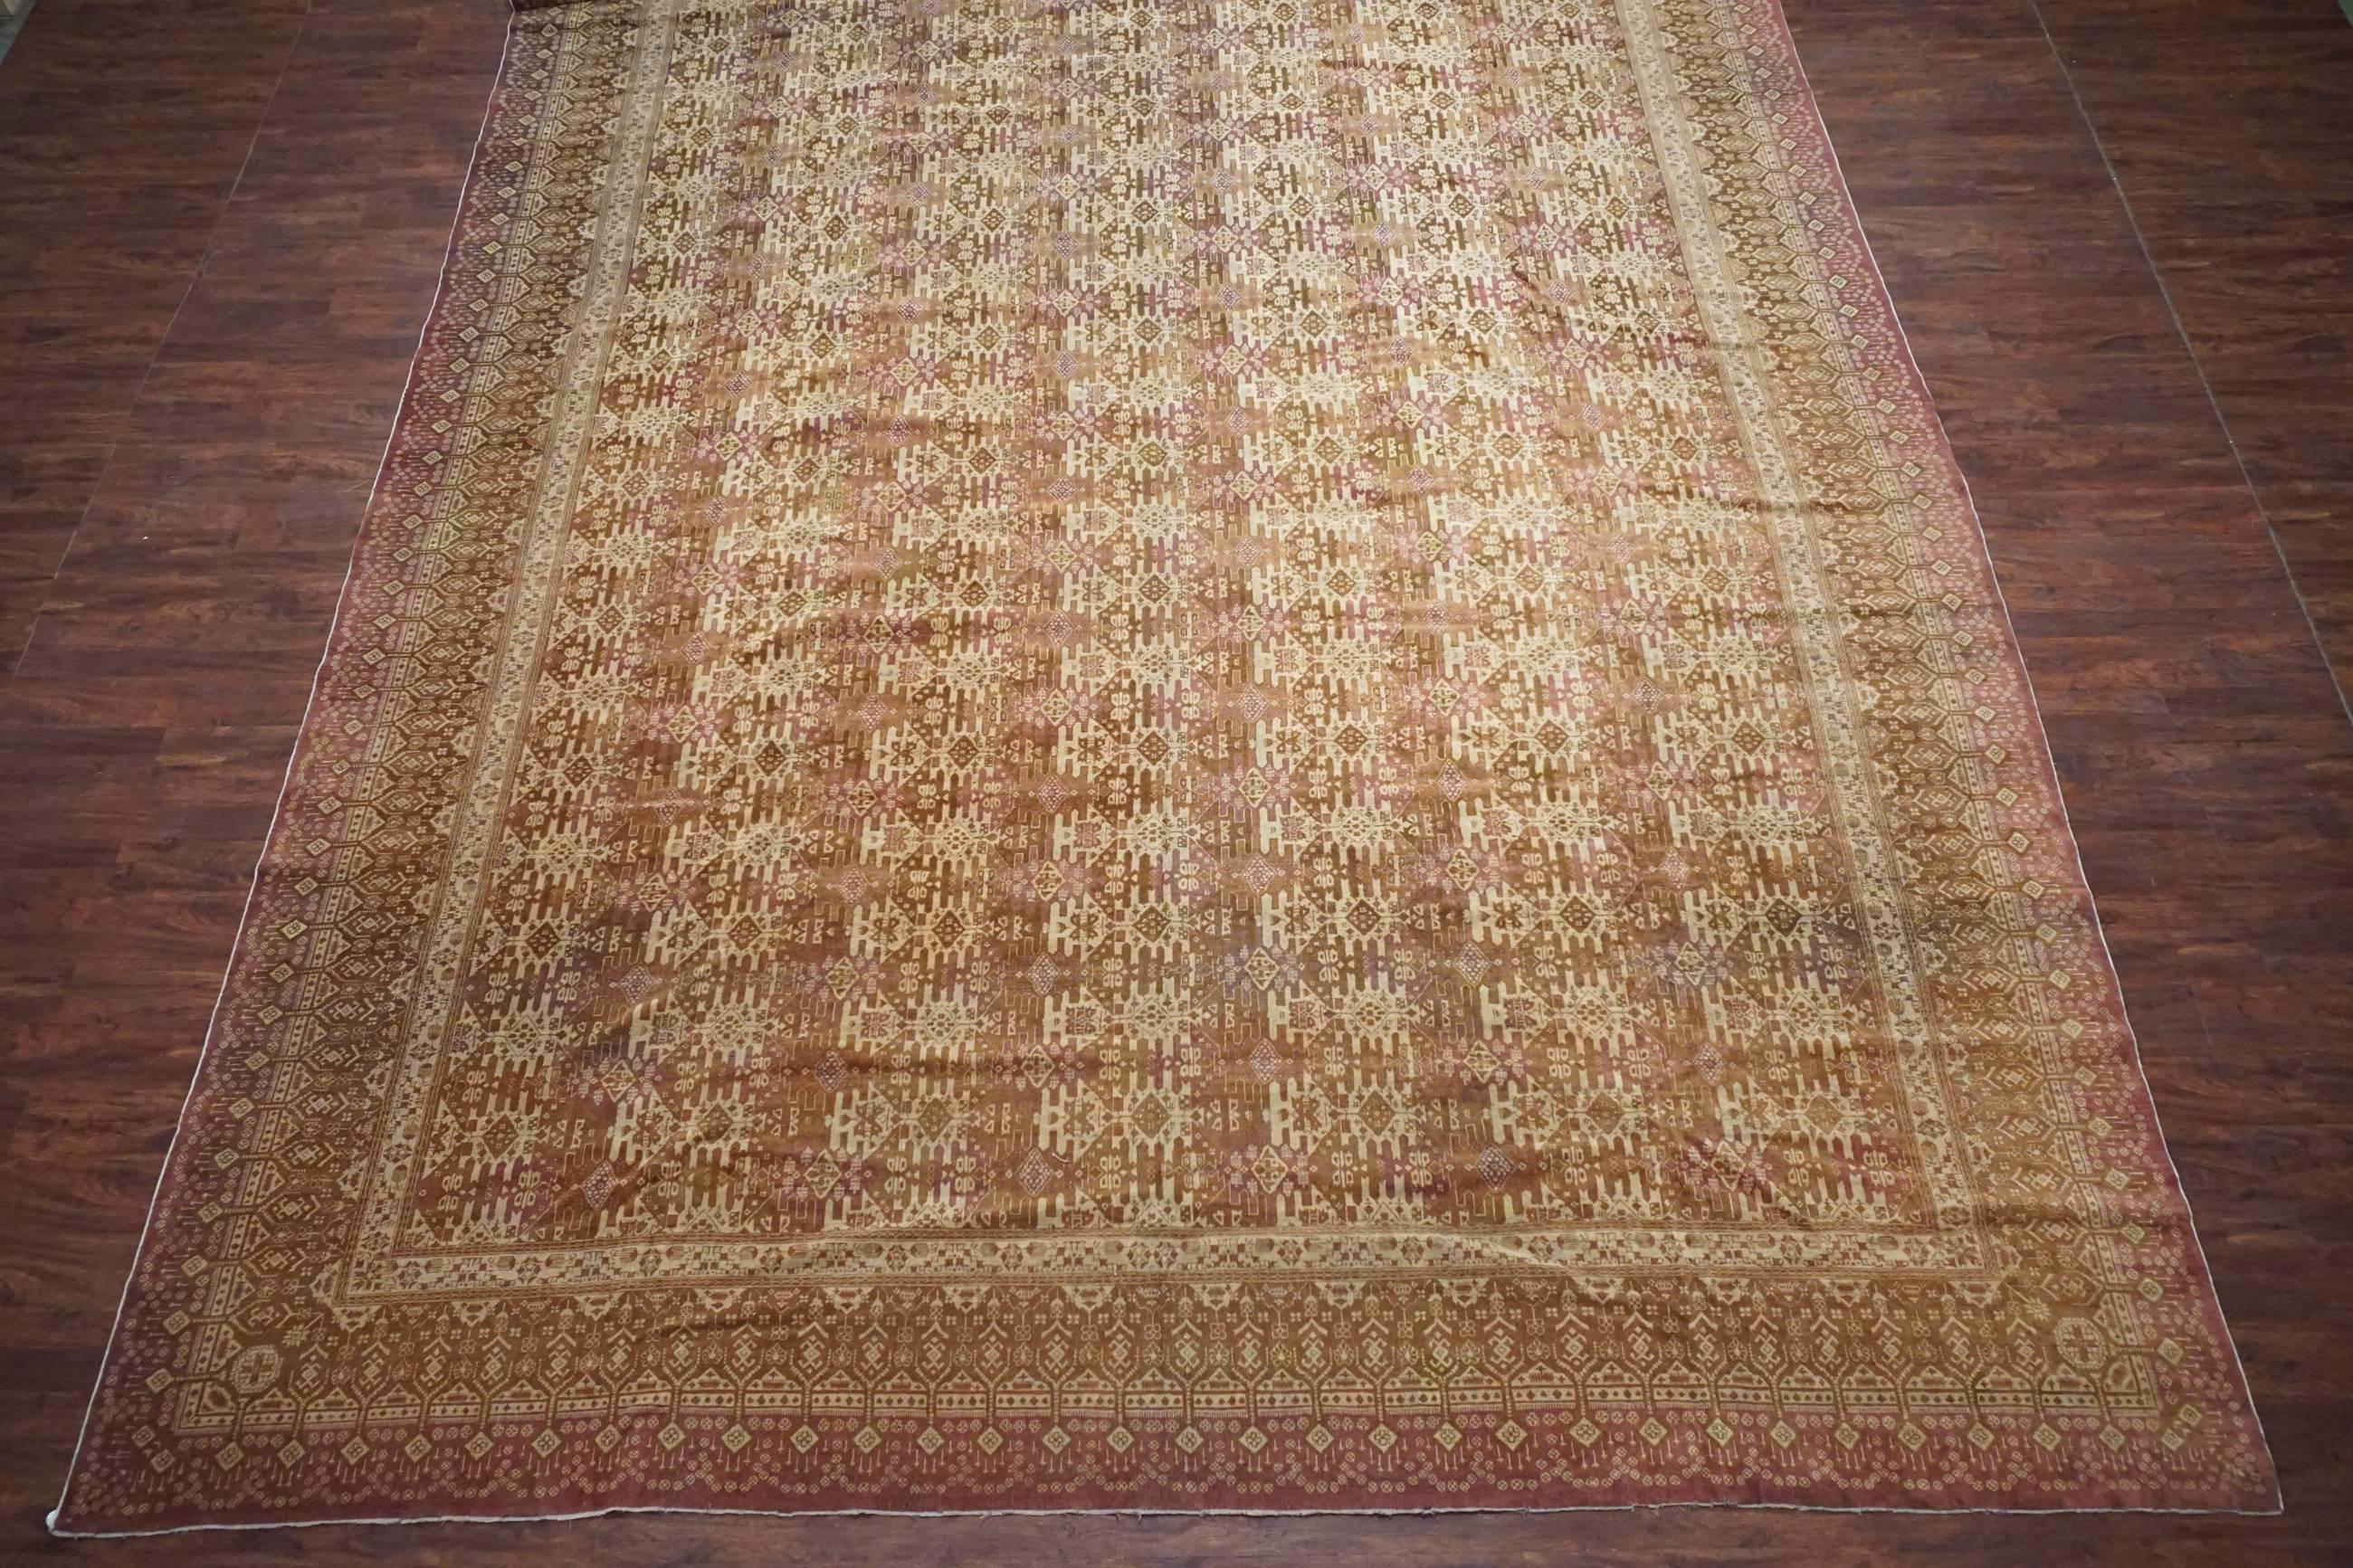 Antique Indian Agra rug

circa 1890

Measure: 13' x 18' 8